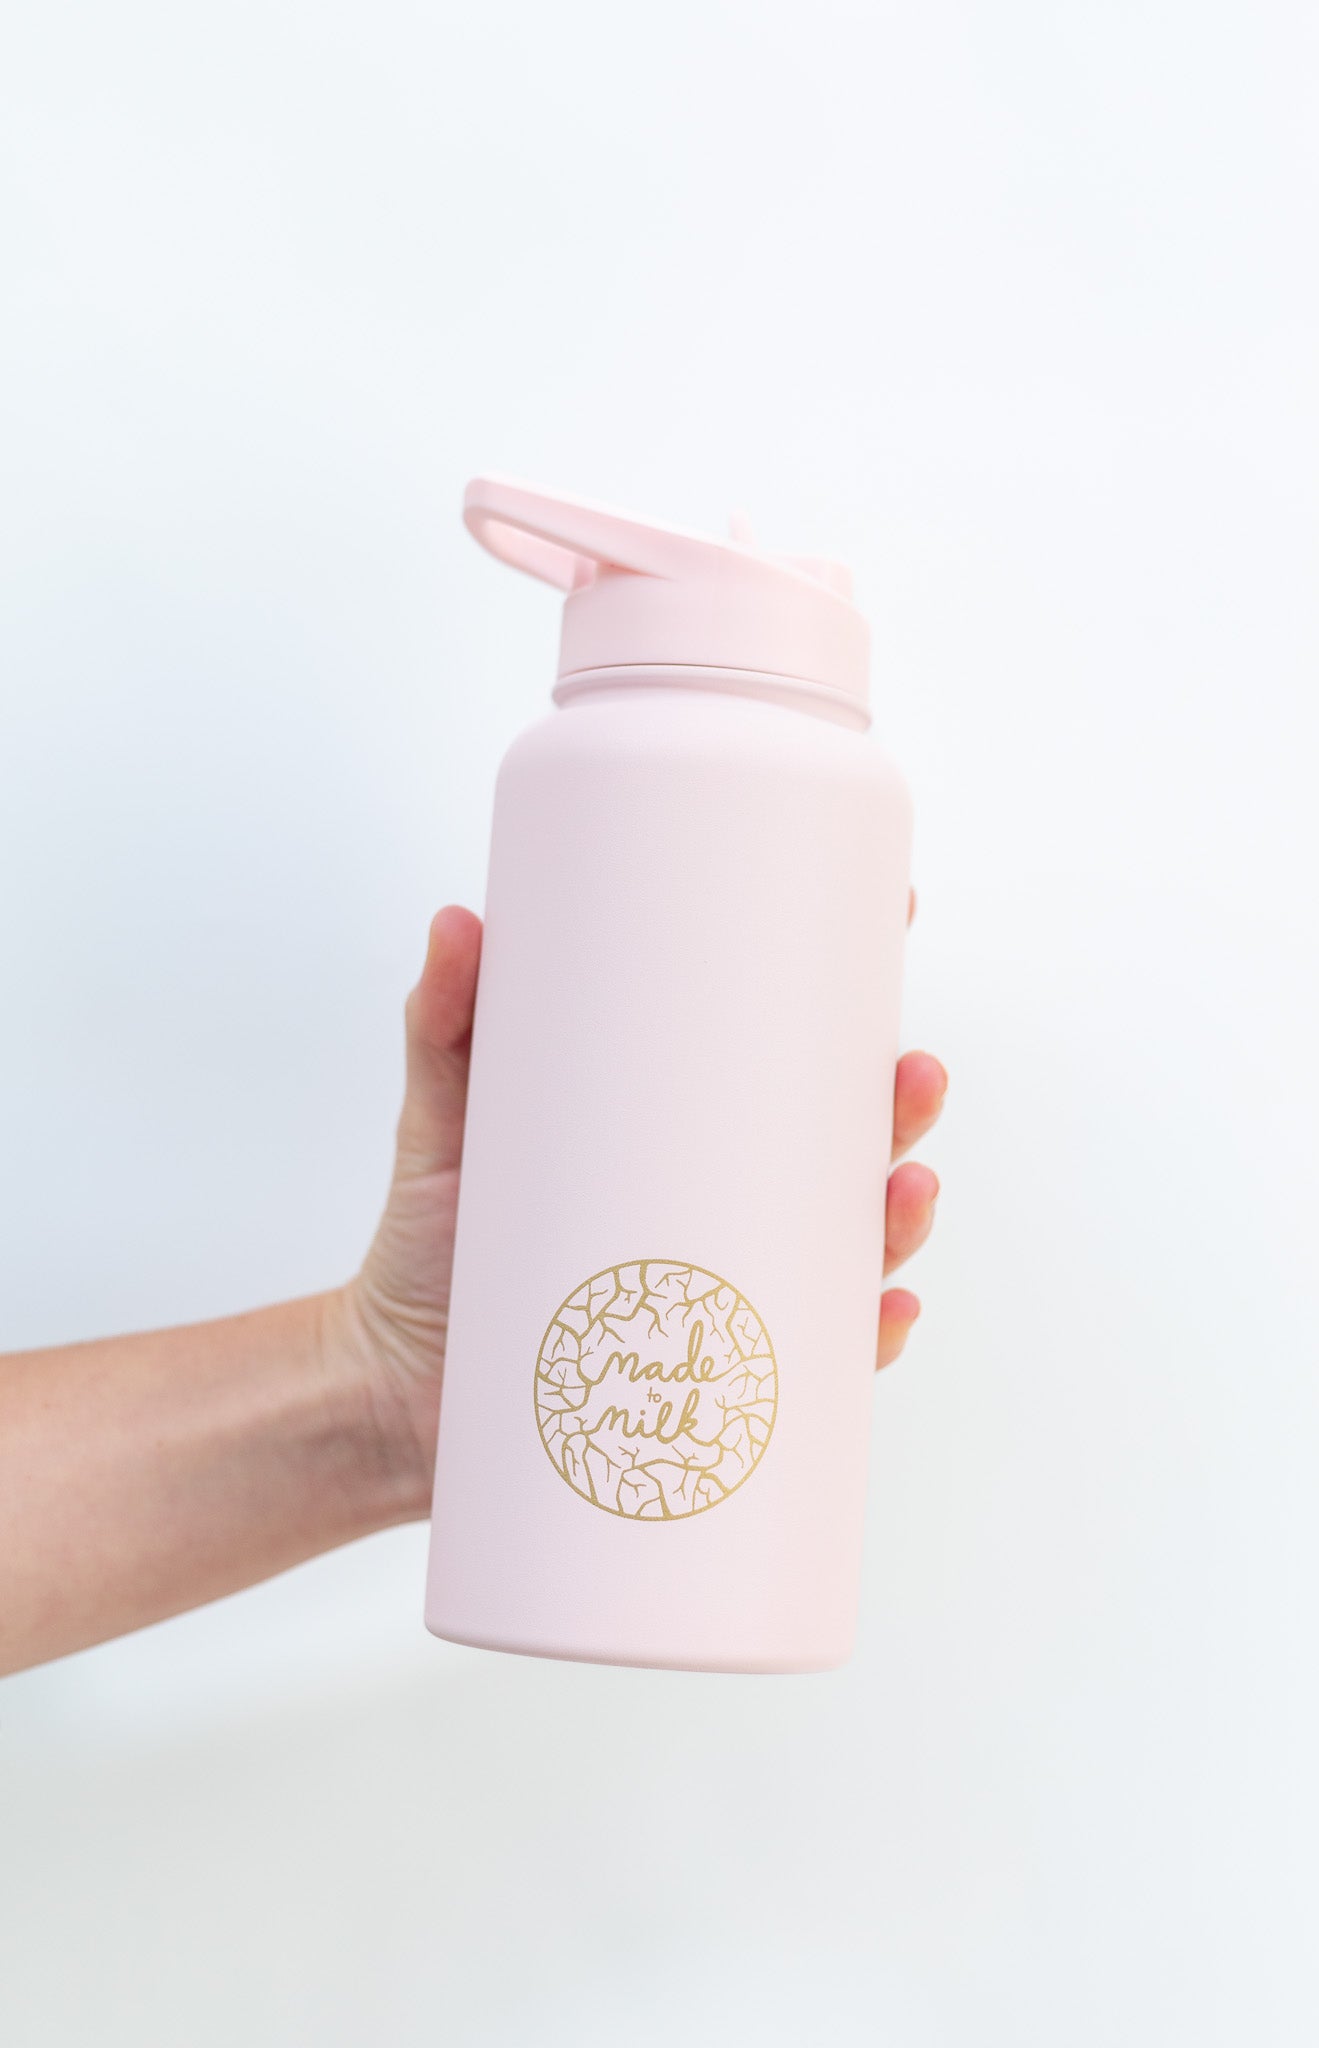 The Ultimate Breastfeeder's Water Bottle (254592090141)